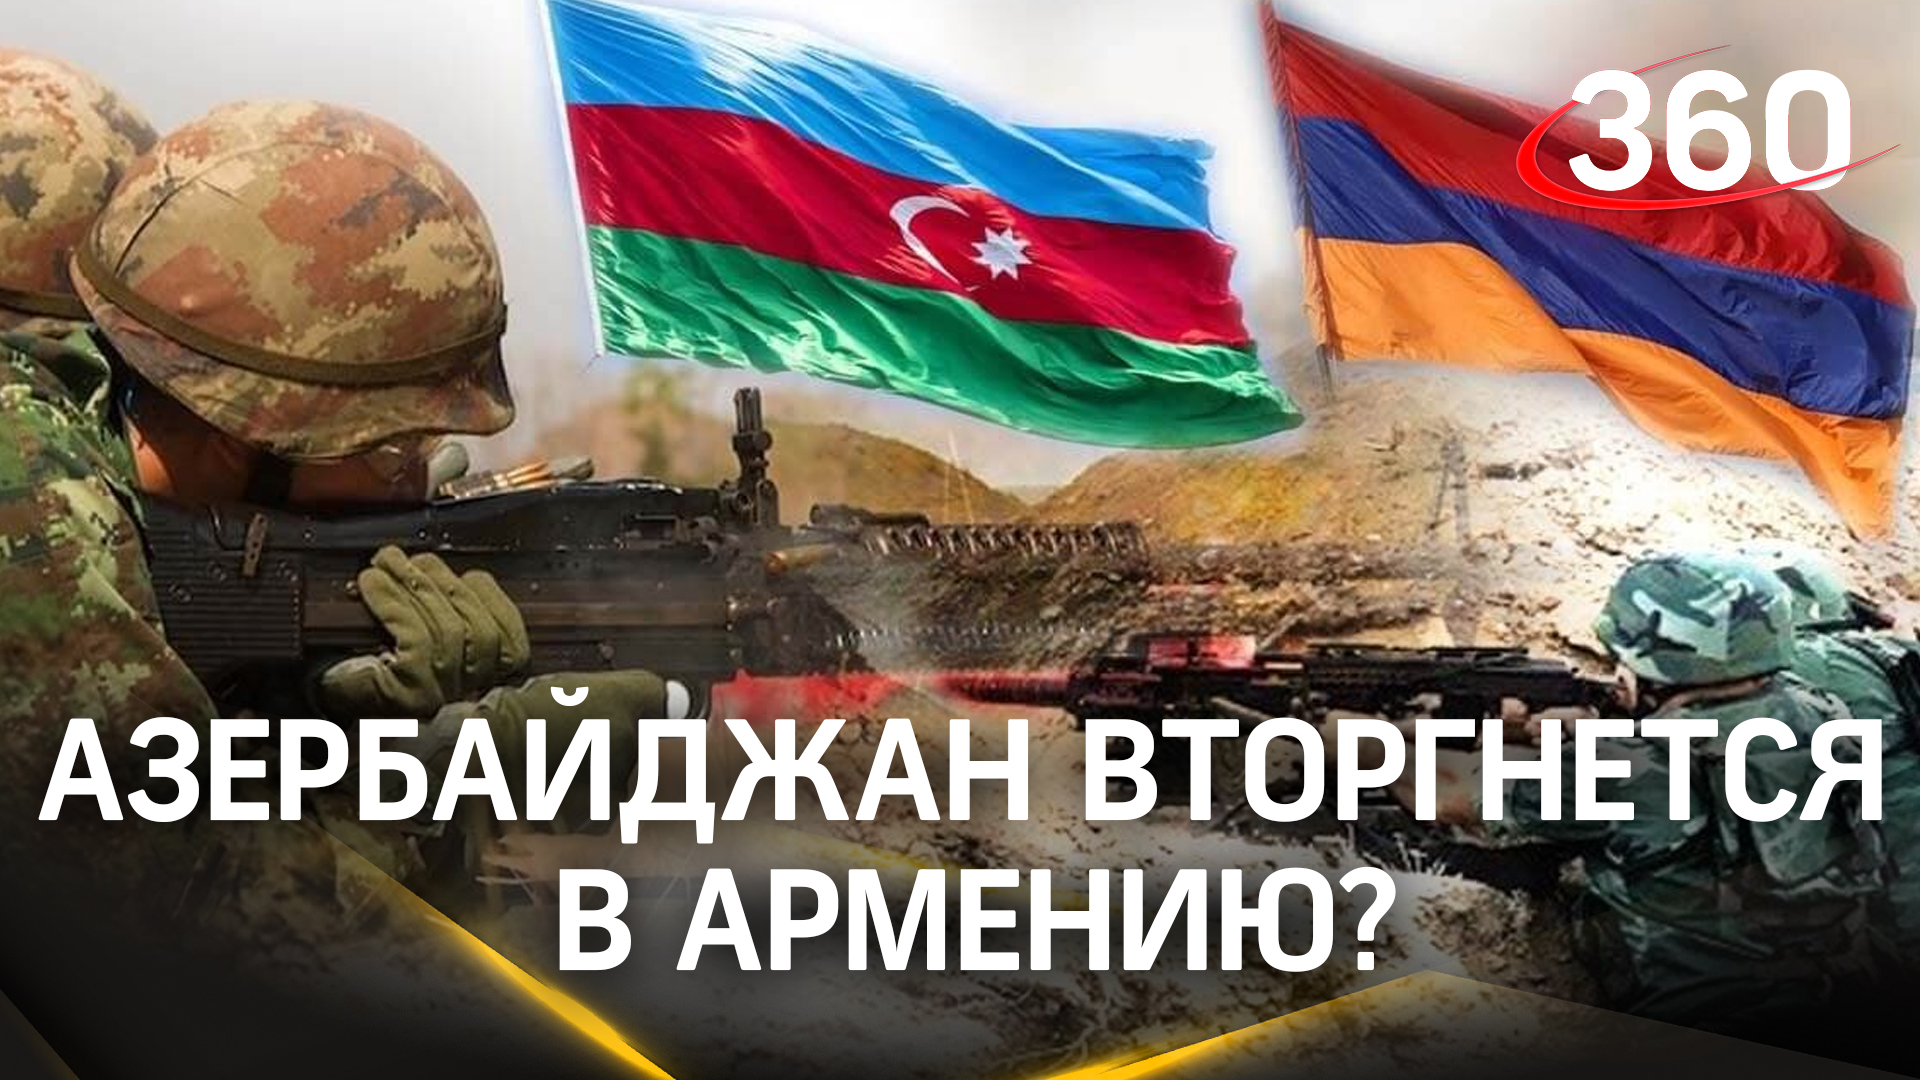 Азербайджан начнет войну